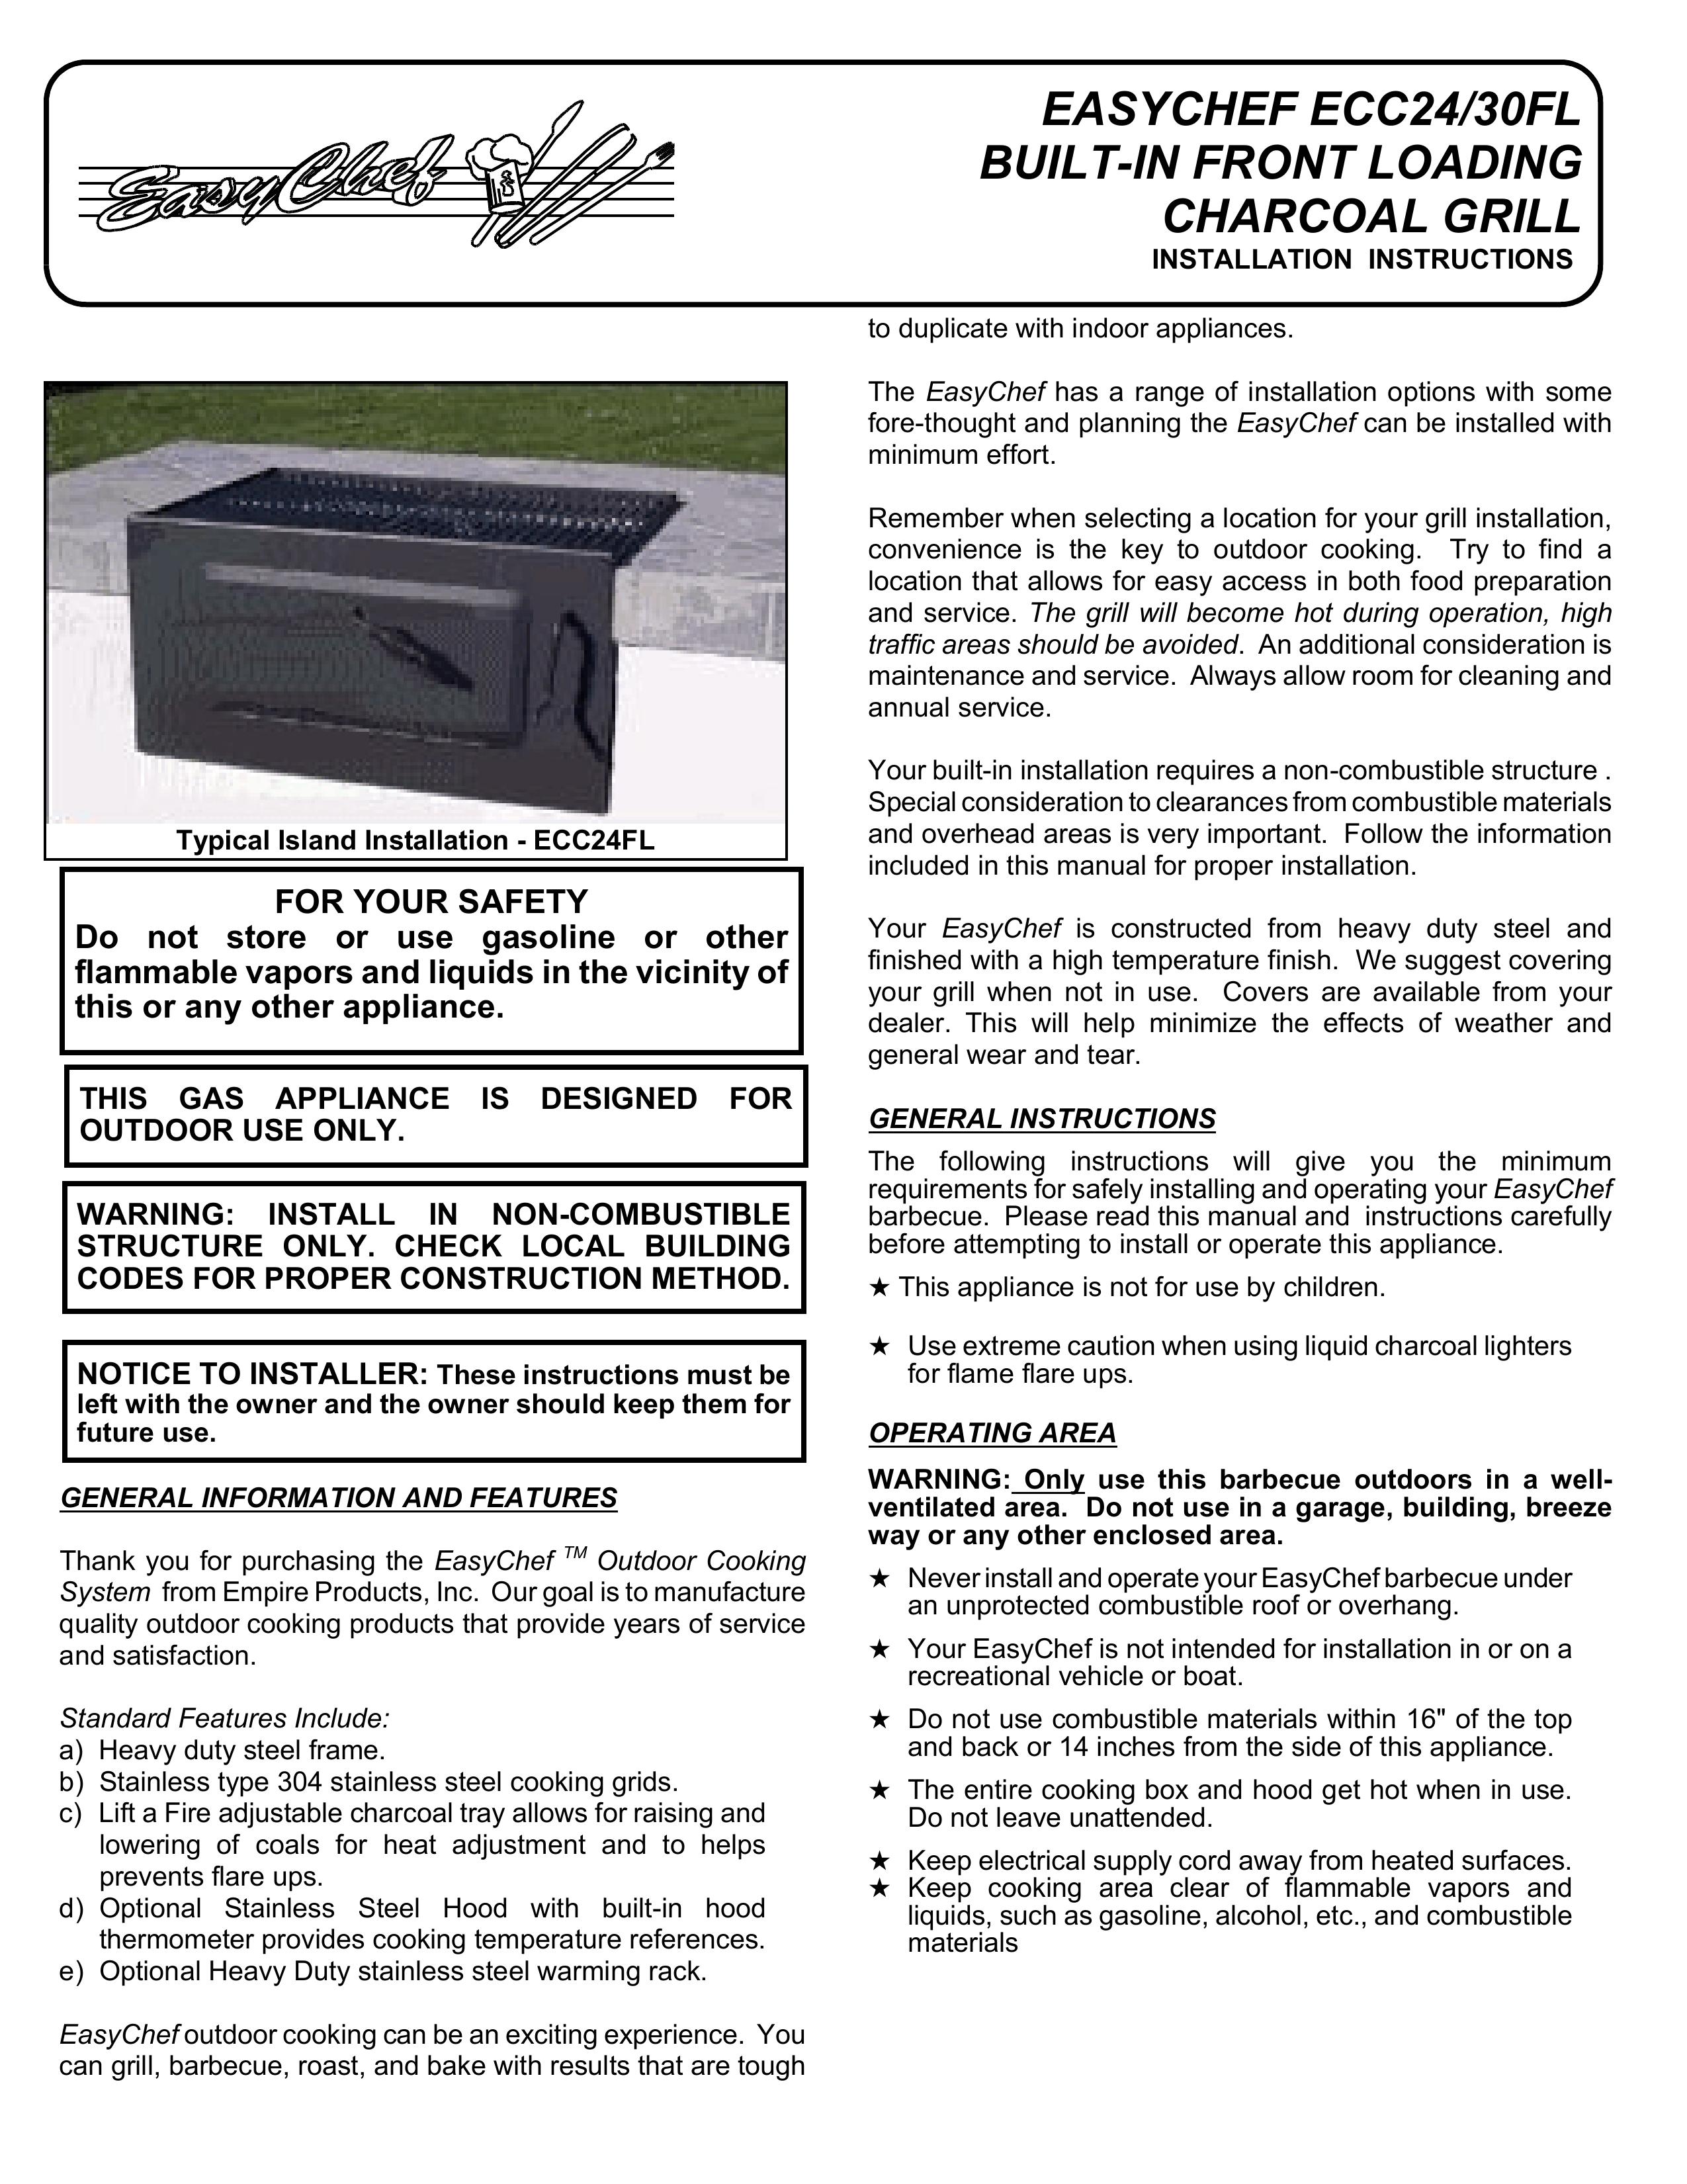 Sierra Products ECC24FL Charcoal Grill User Manual